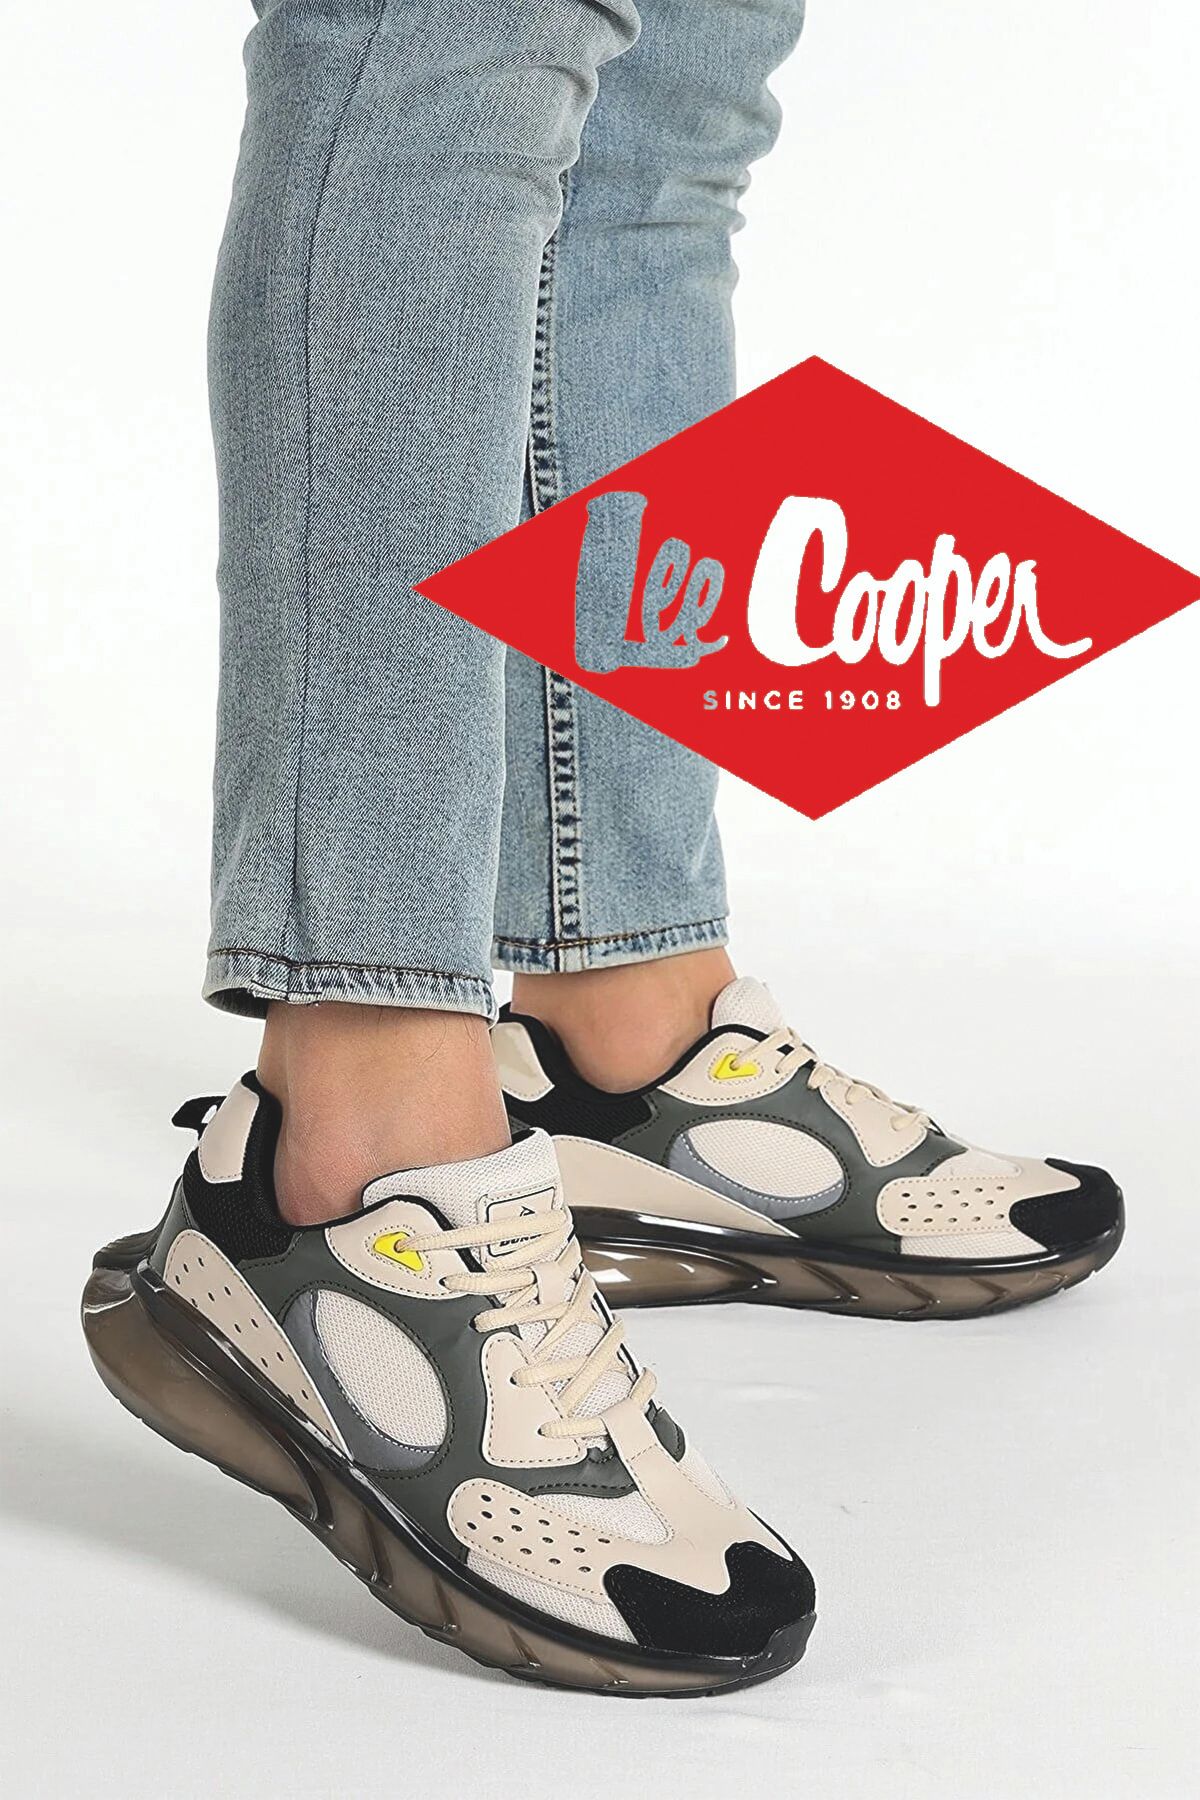 Lee Cooper Günlük Erkek Rahat Sneaker